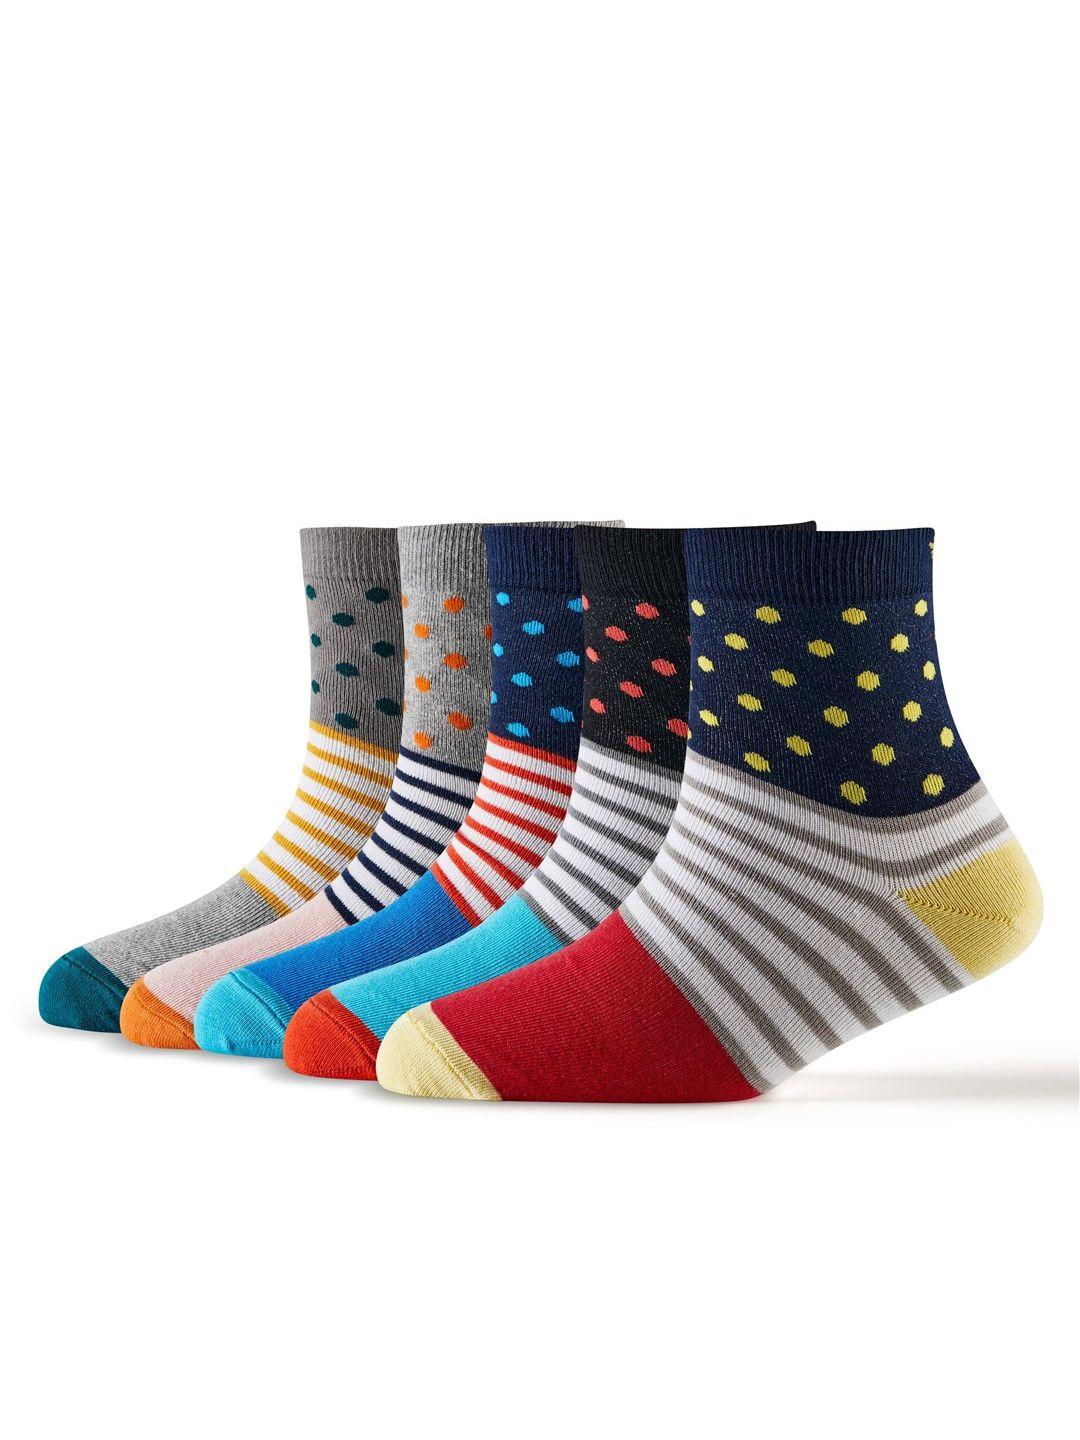 cotstyle-men-pack-of-5-patterned-ankle-length-socks